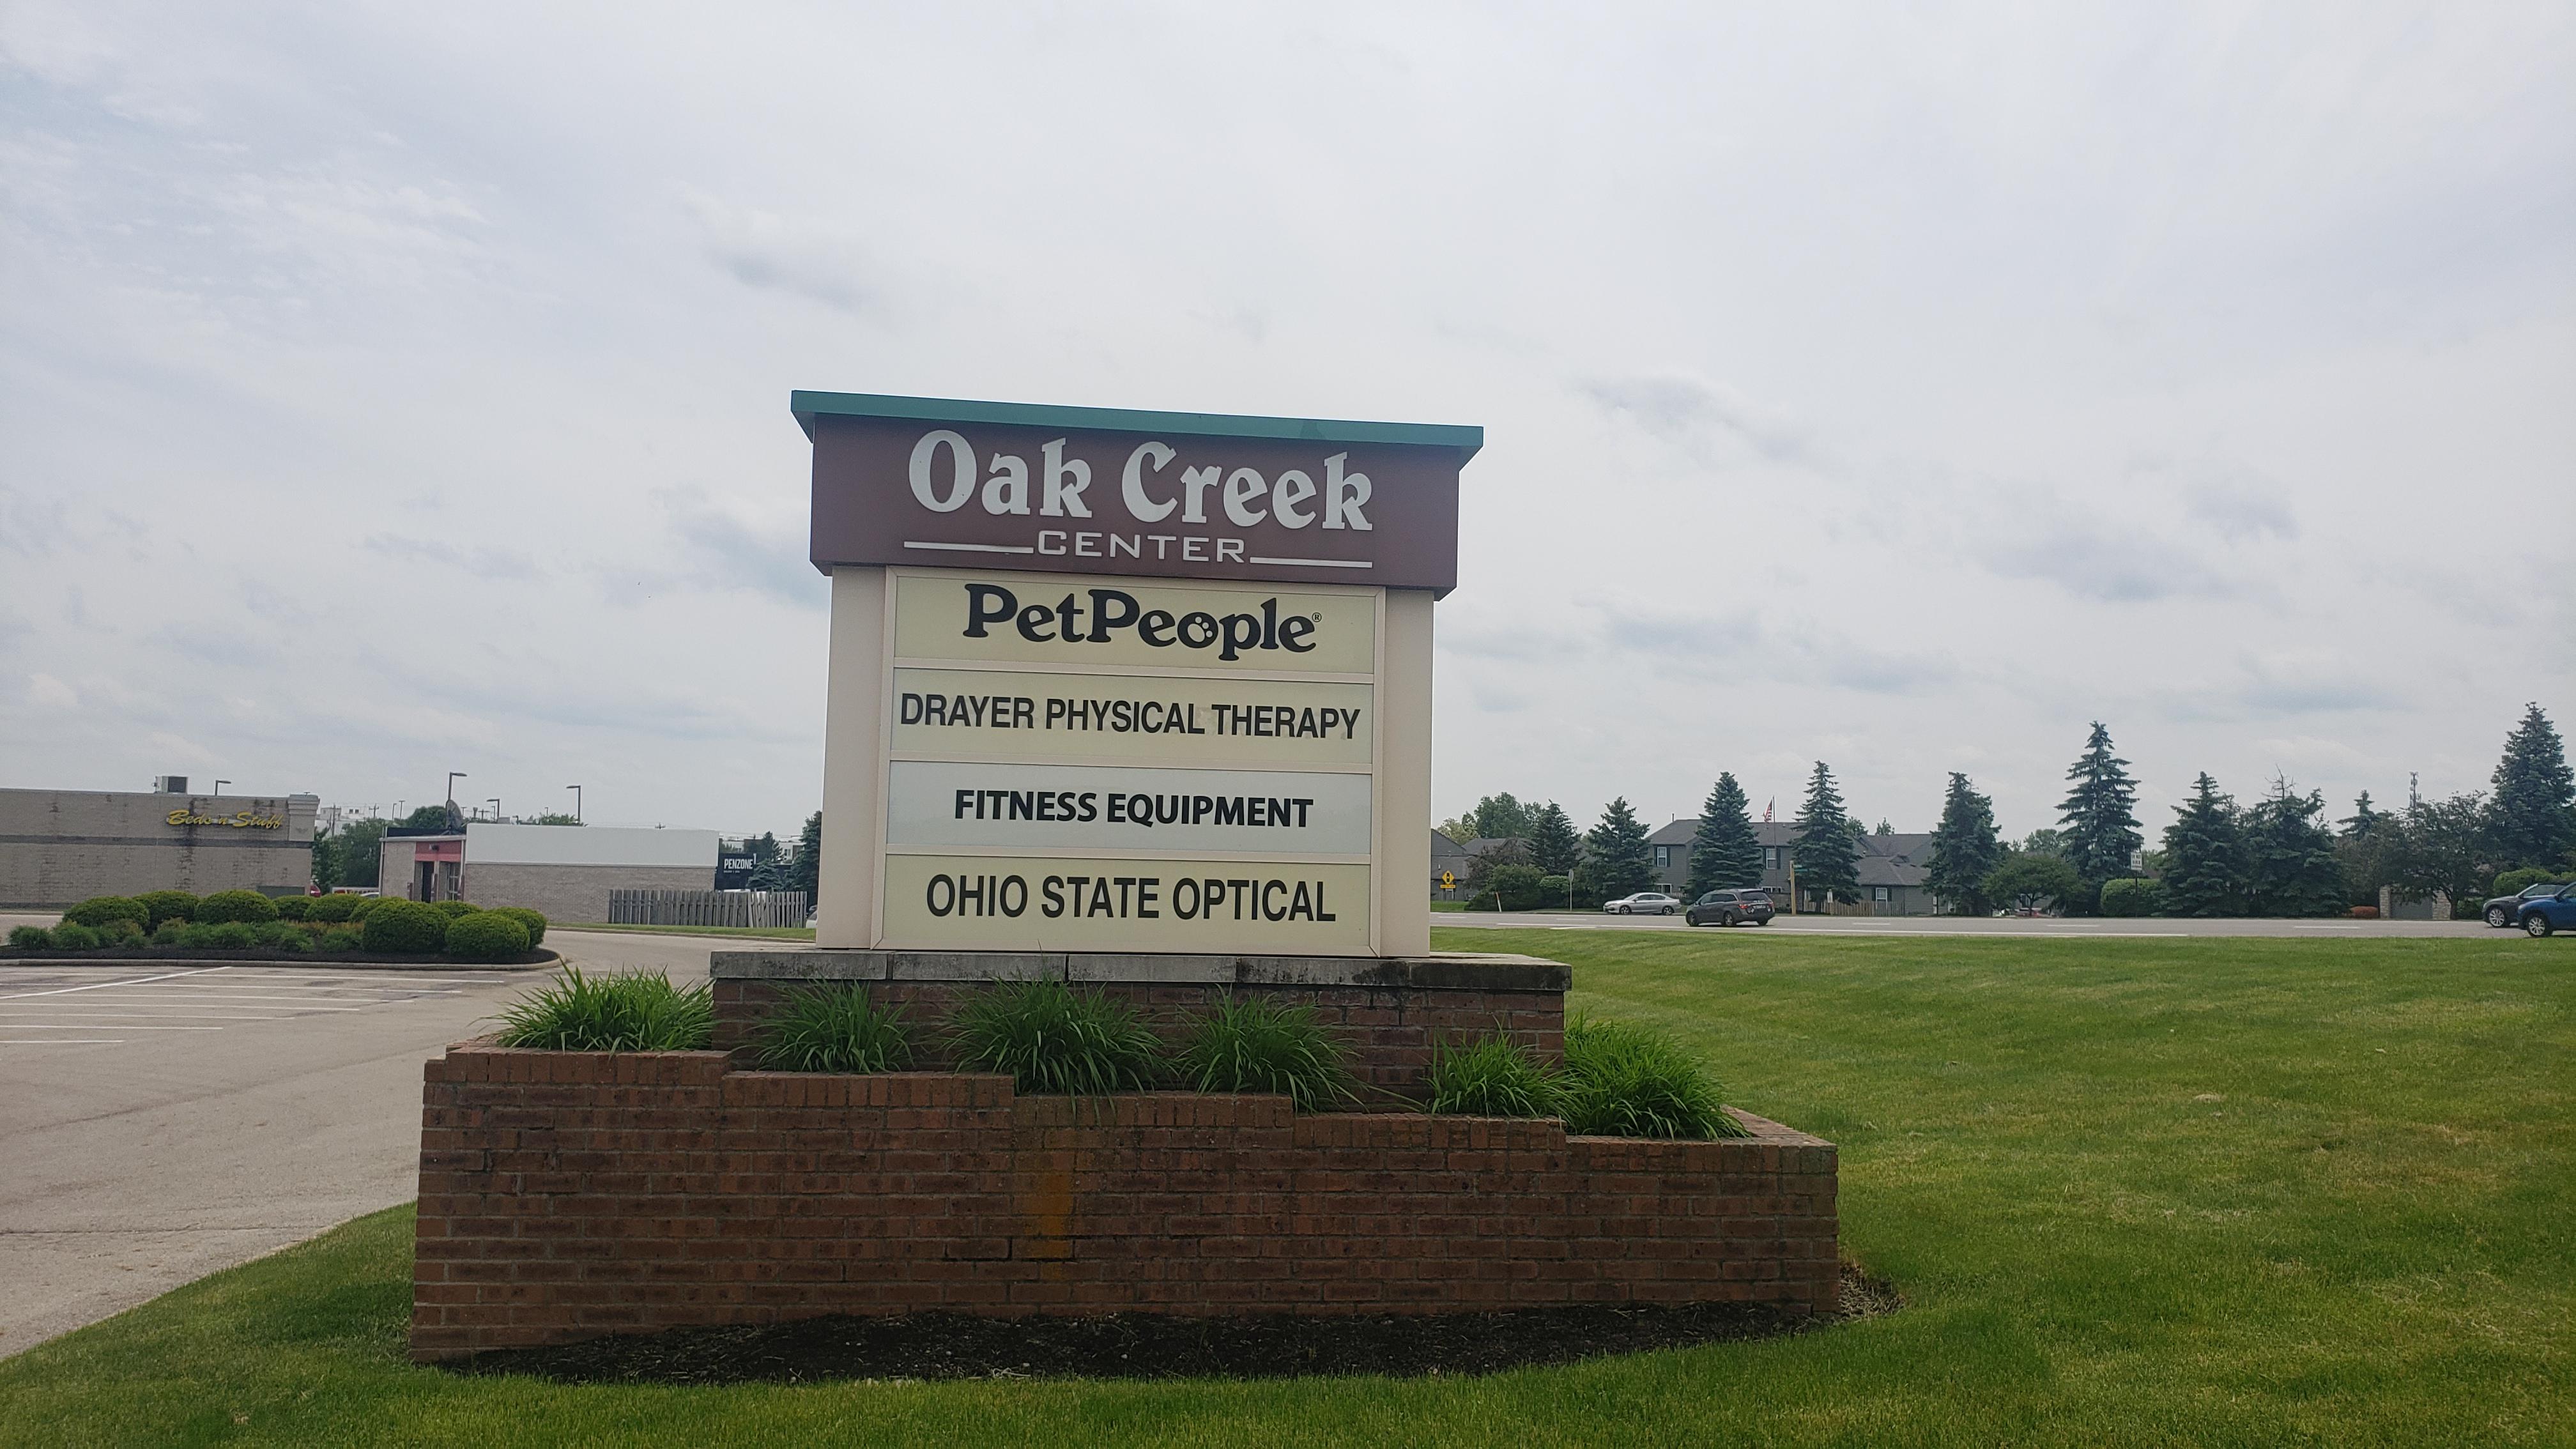 Ohio State Optical Lewis Center (614)888-3972